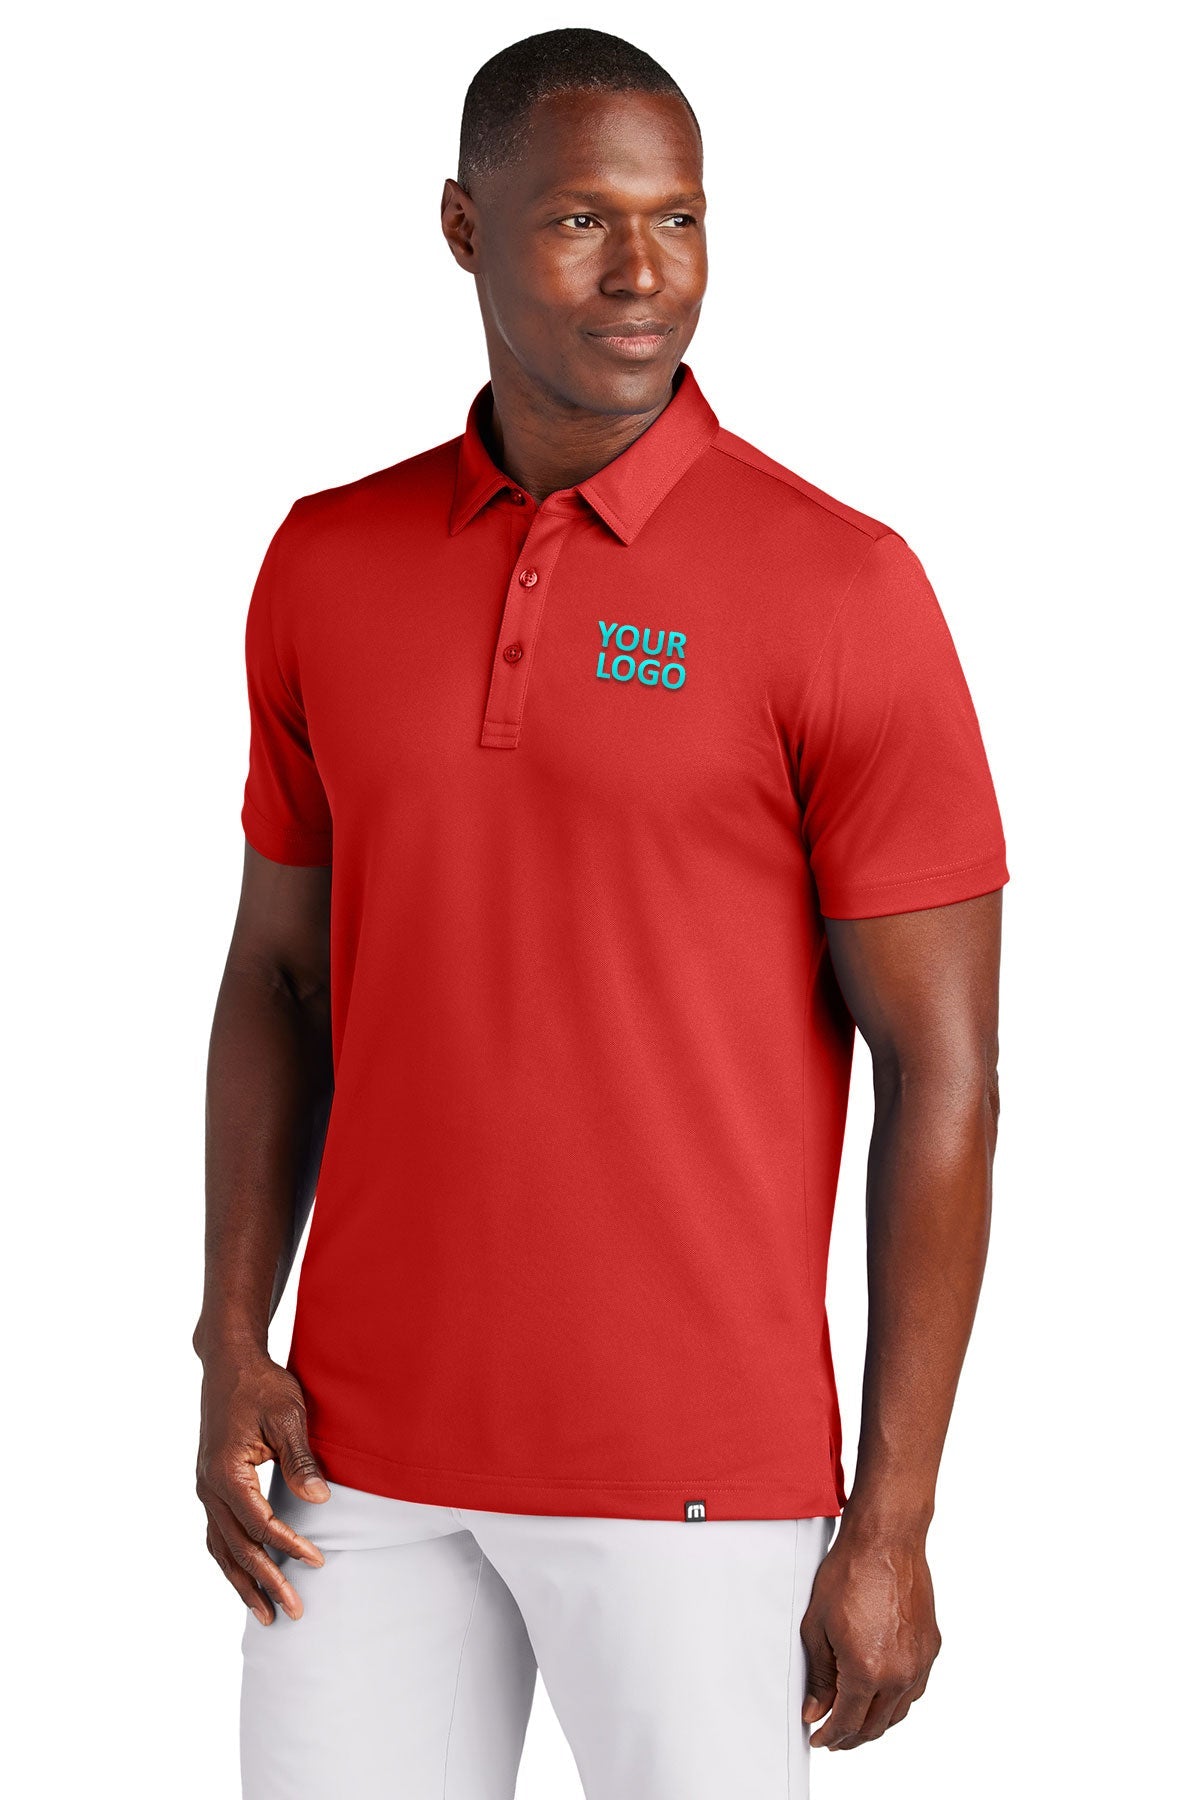 TravisMathew Crimson TM1MAA370 custom logo polo shirts embroidered